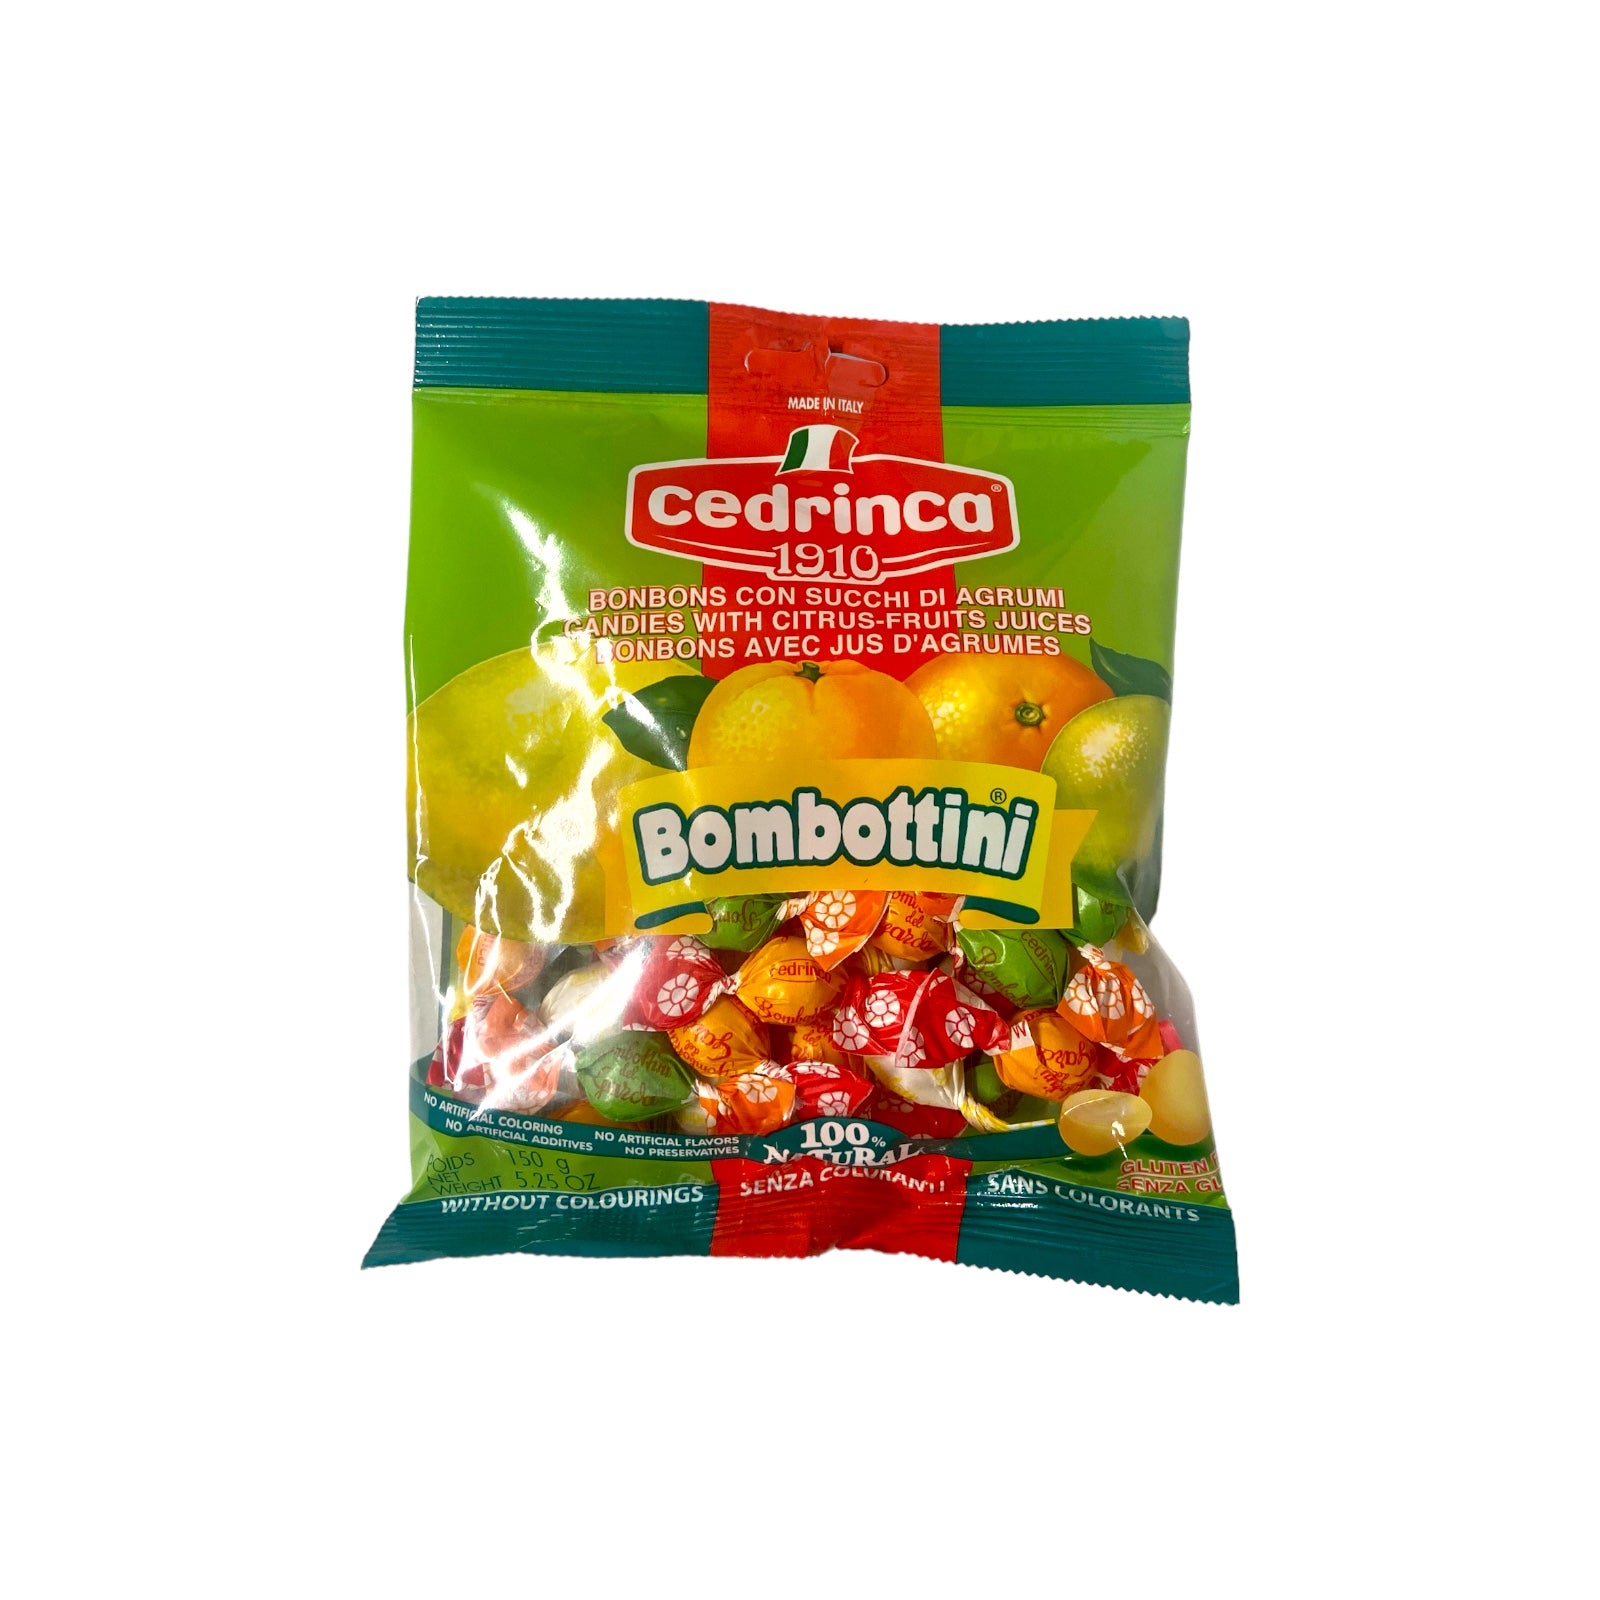 Cedrinca Bombottini Candies With Citrus Fruits Juices